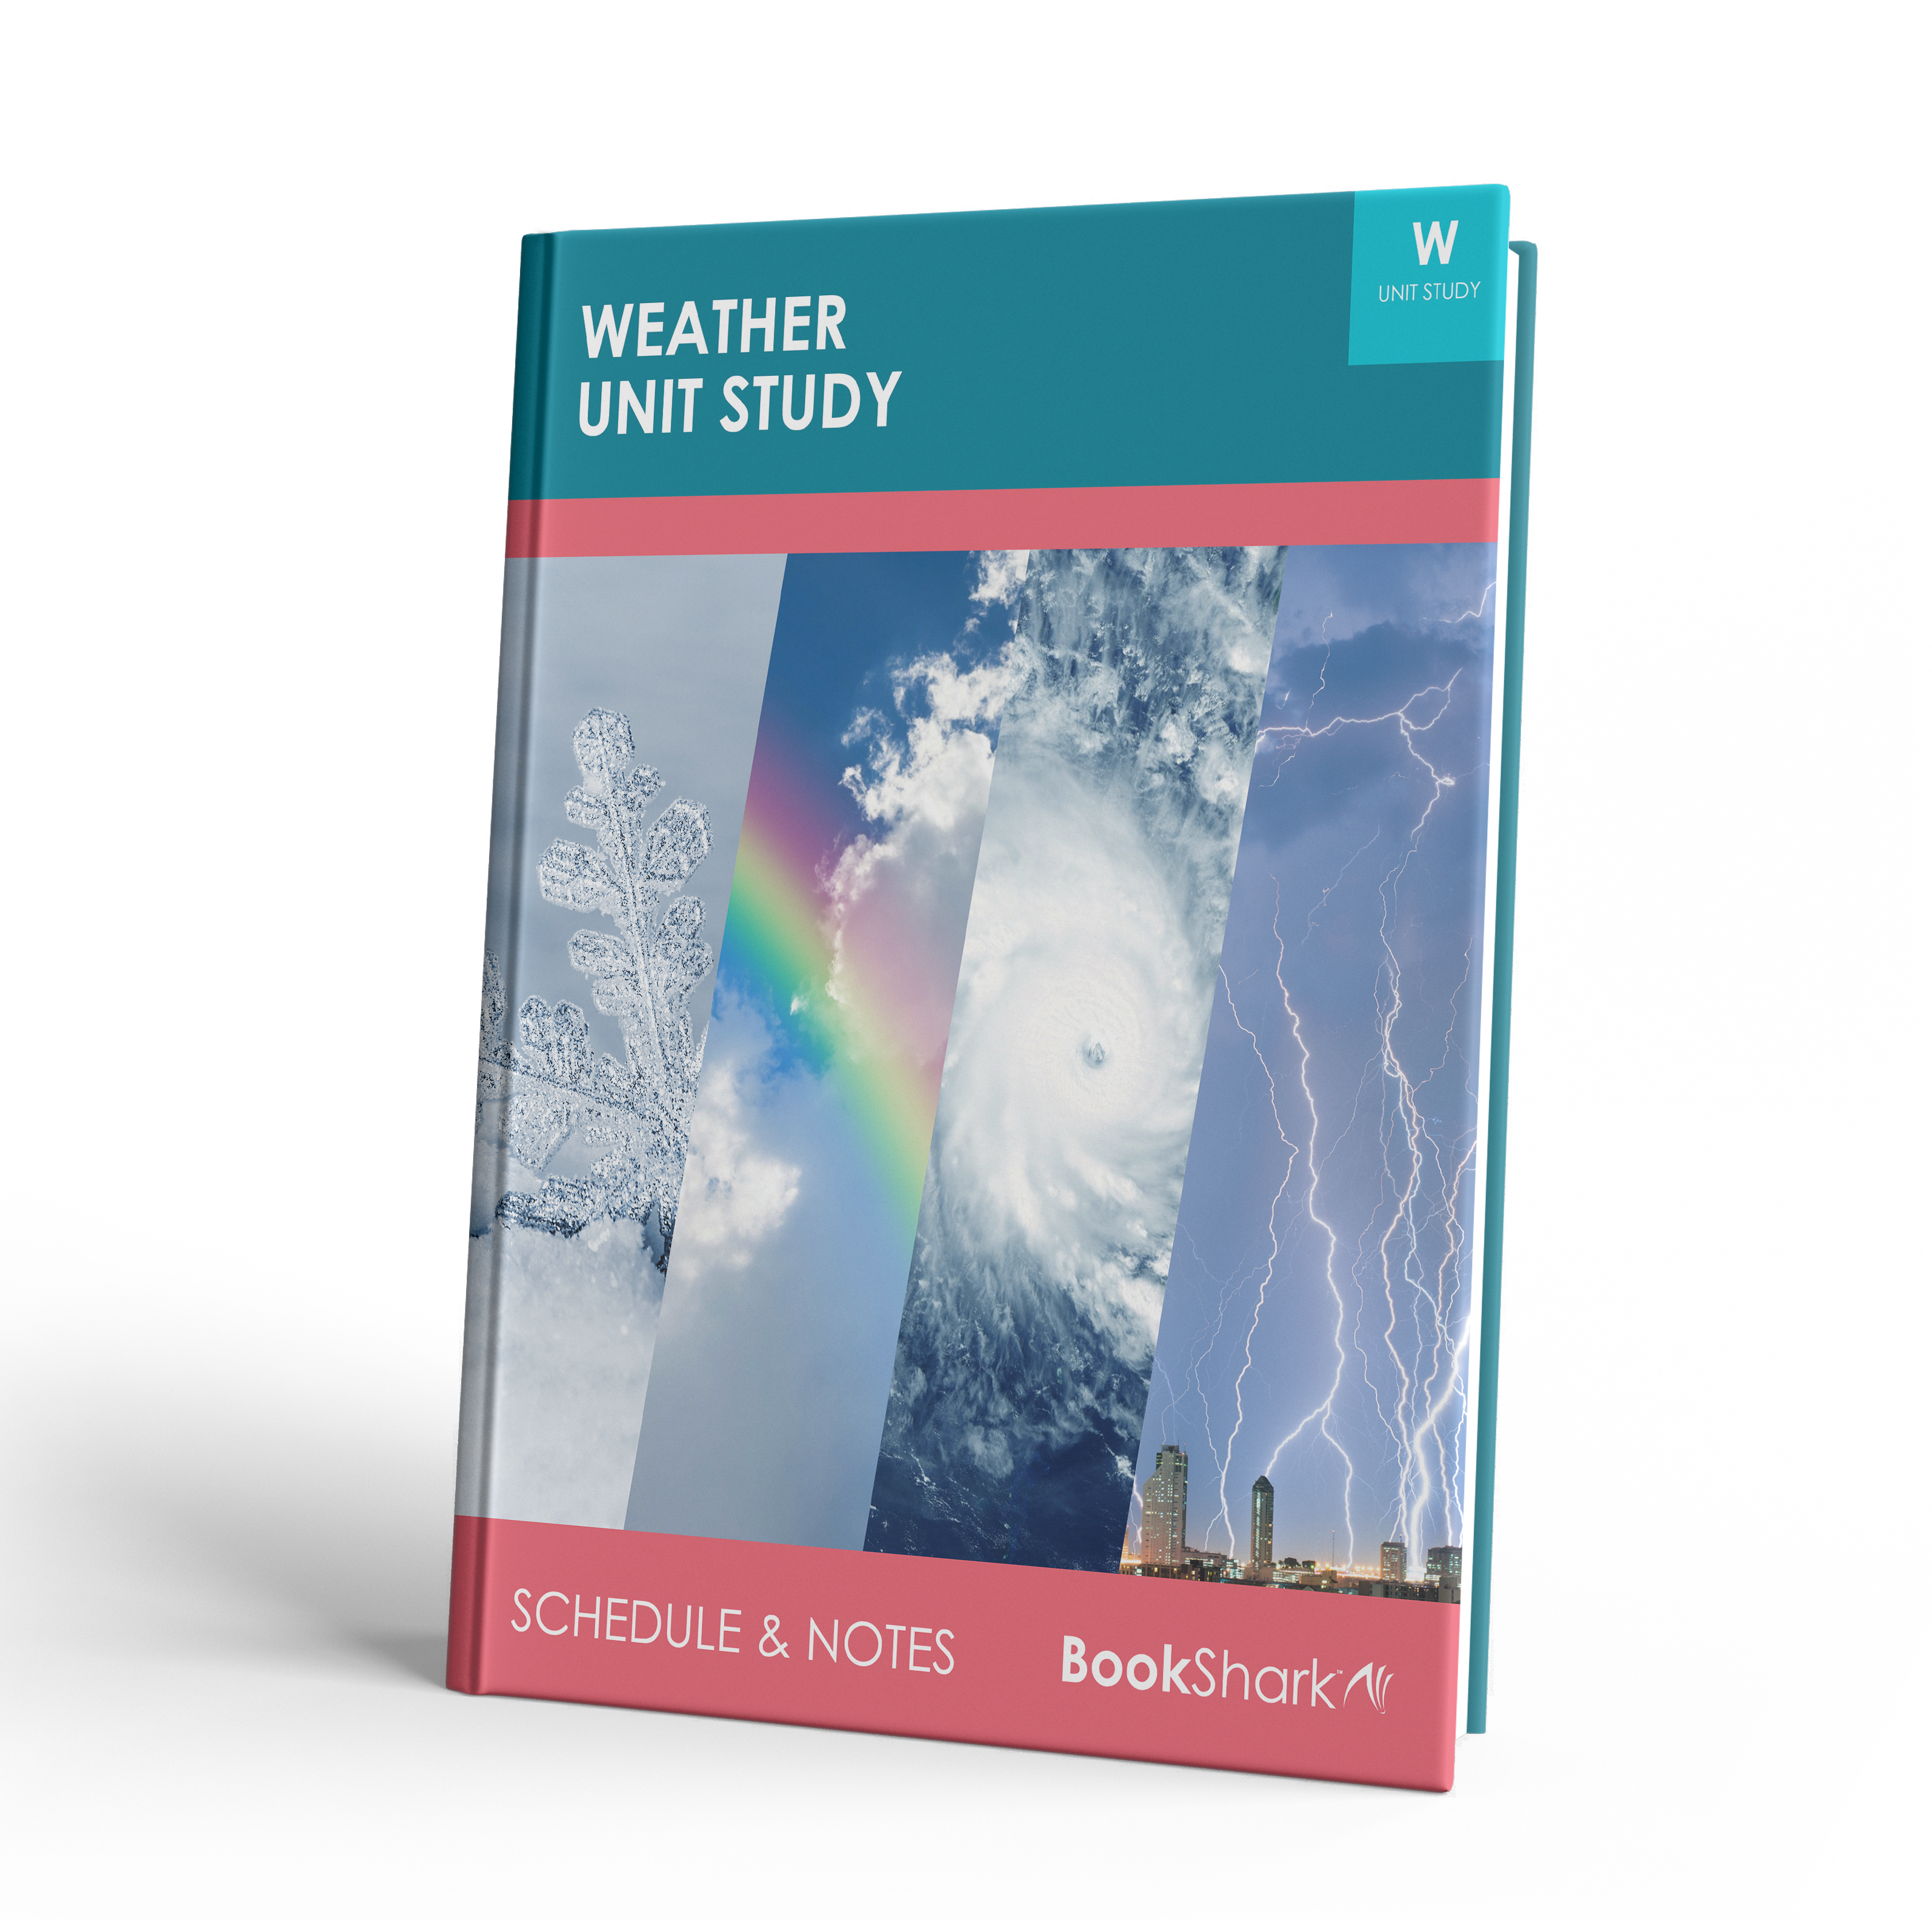 Weather unit study by BookShark